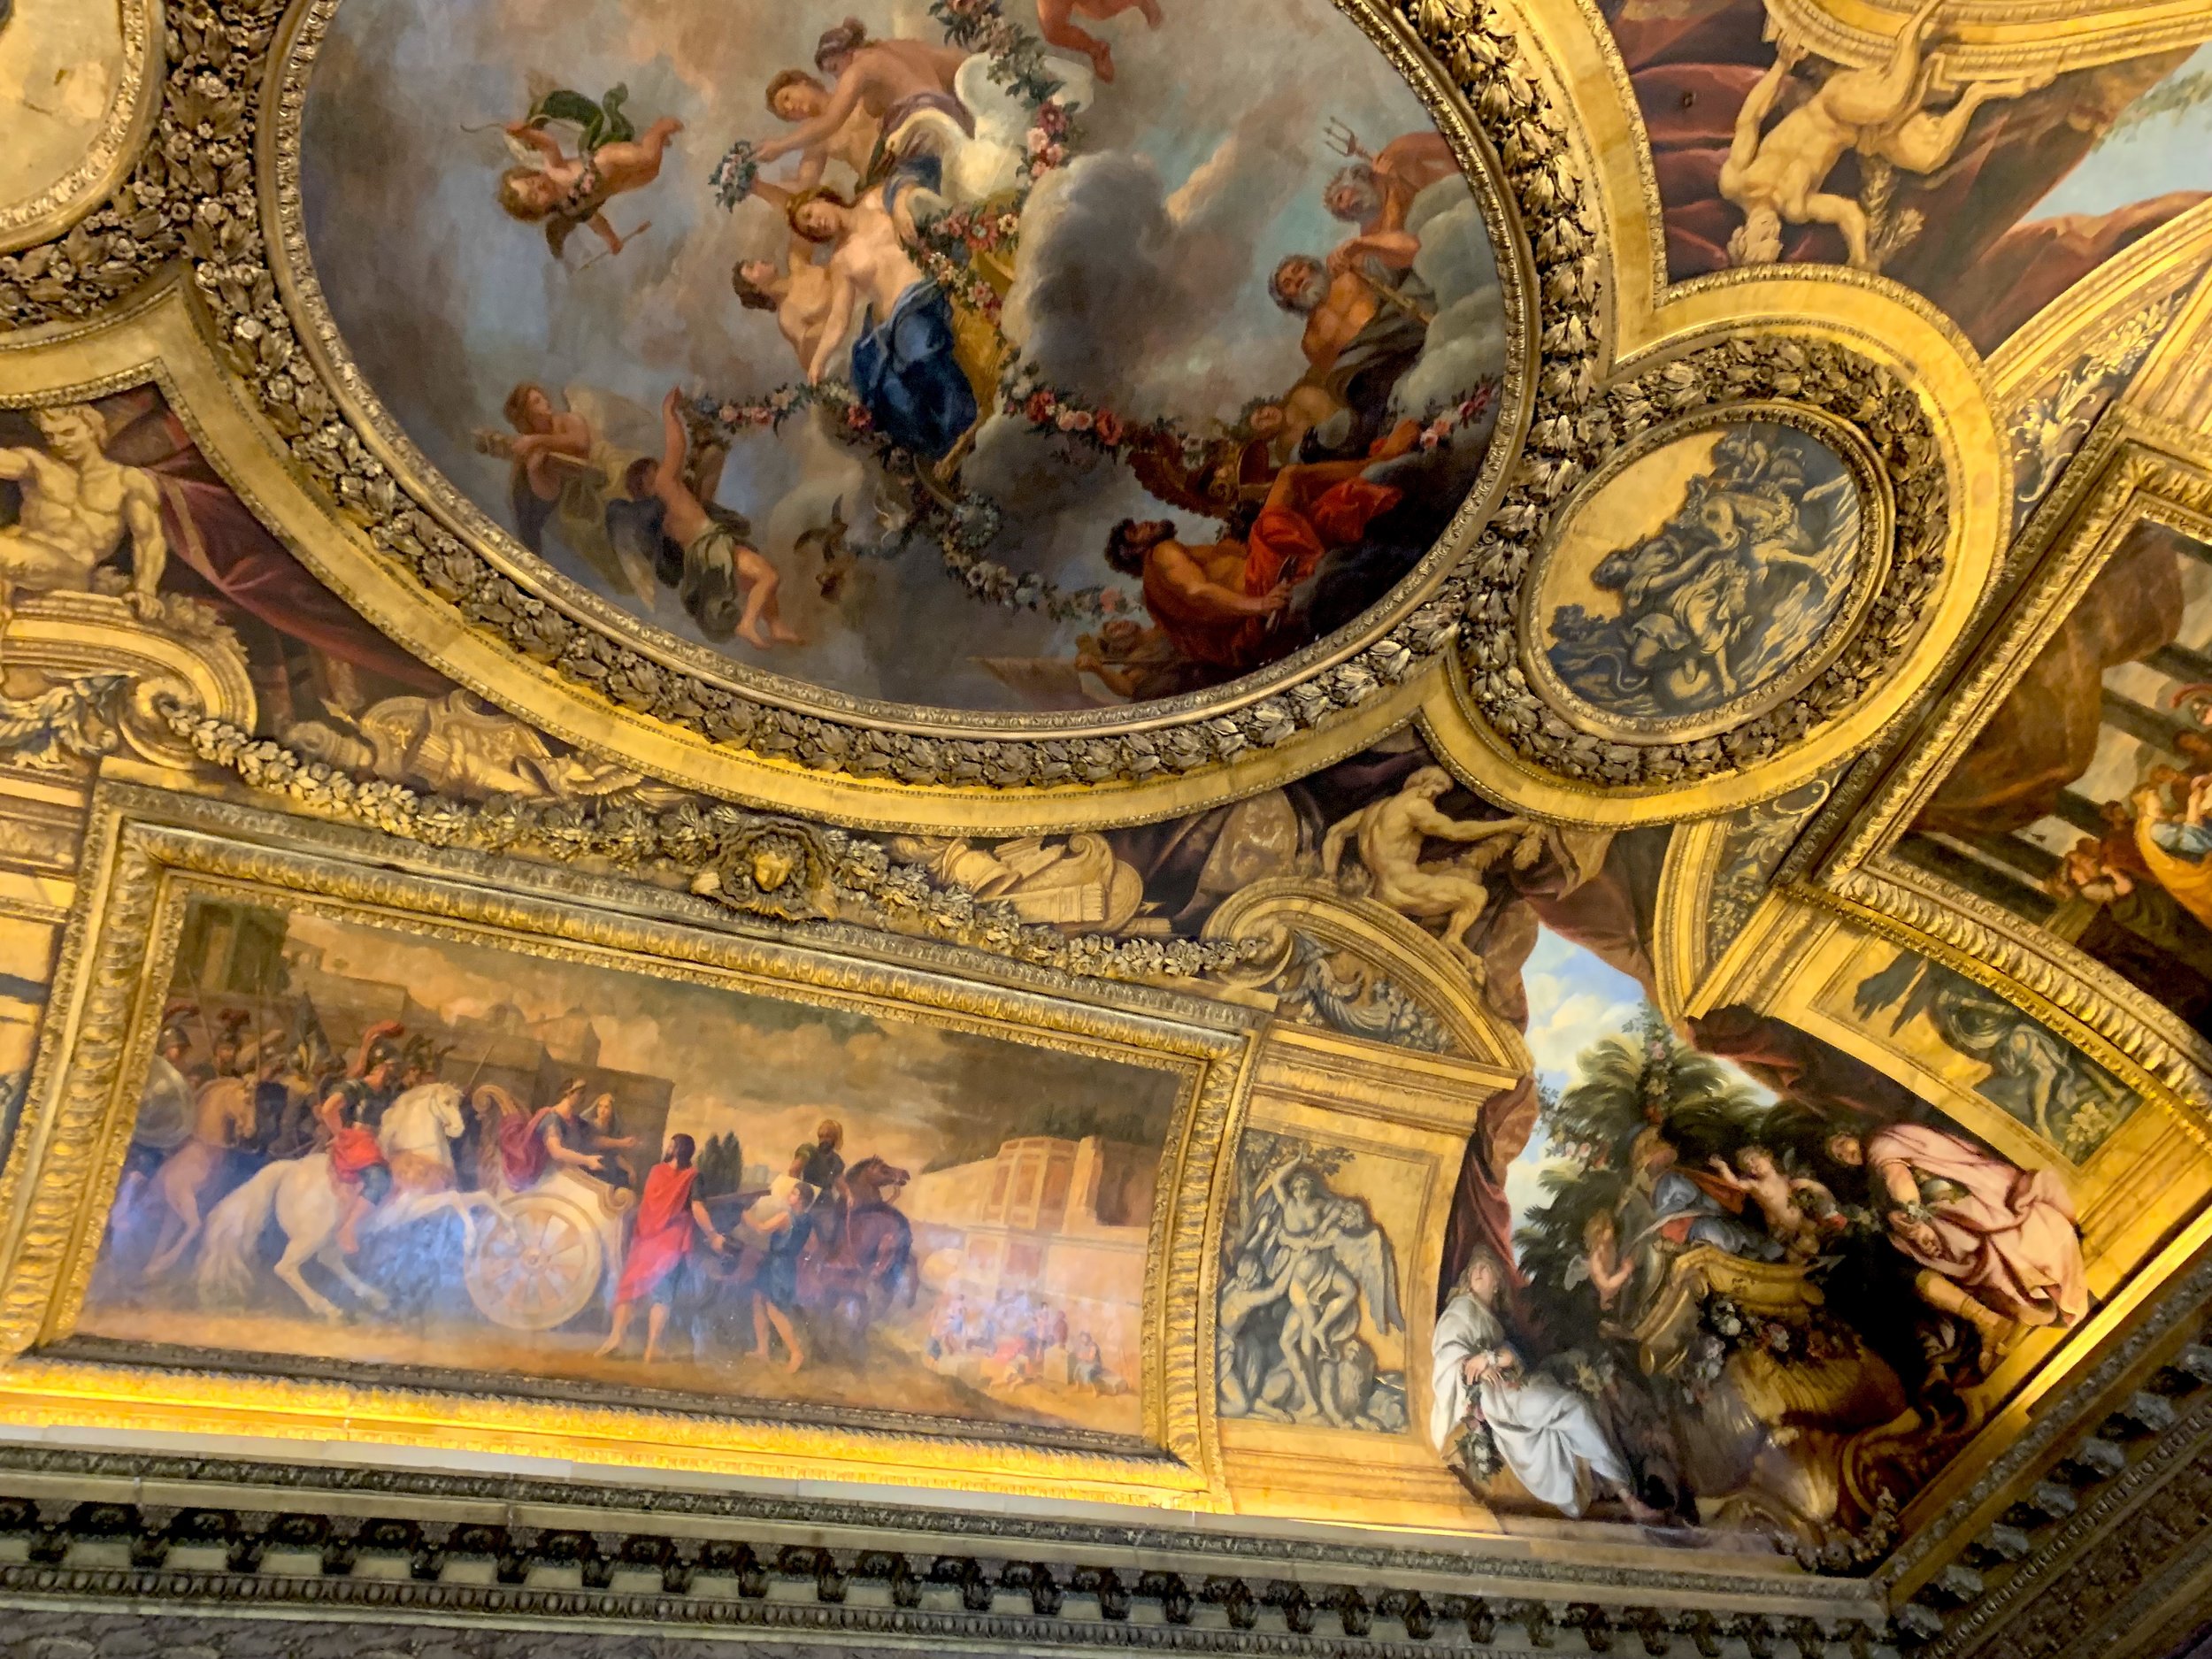 Devi Ohira Chateau de Versailles painting artwork ceiling day trip skip the line.JPG